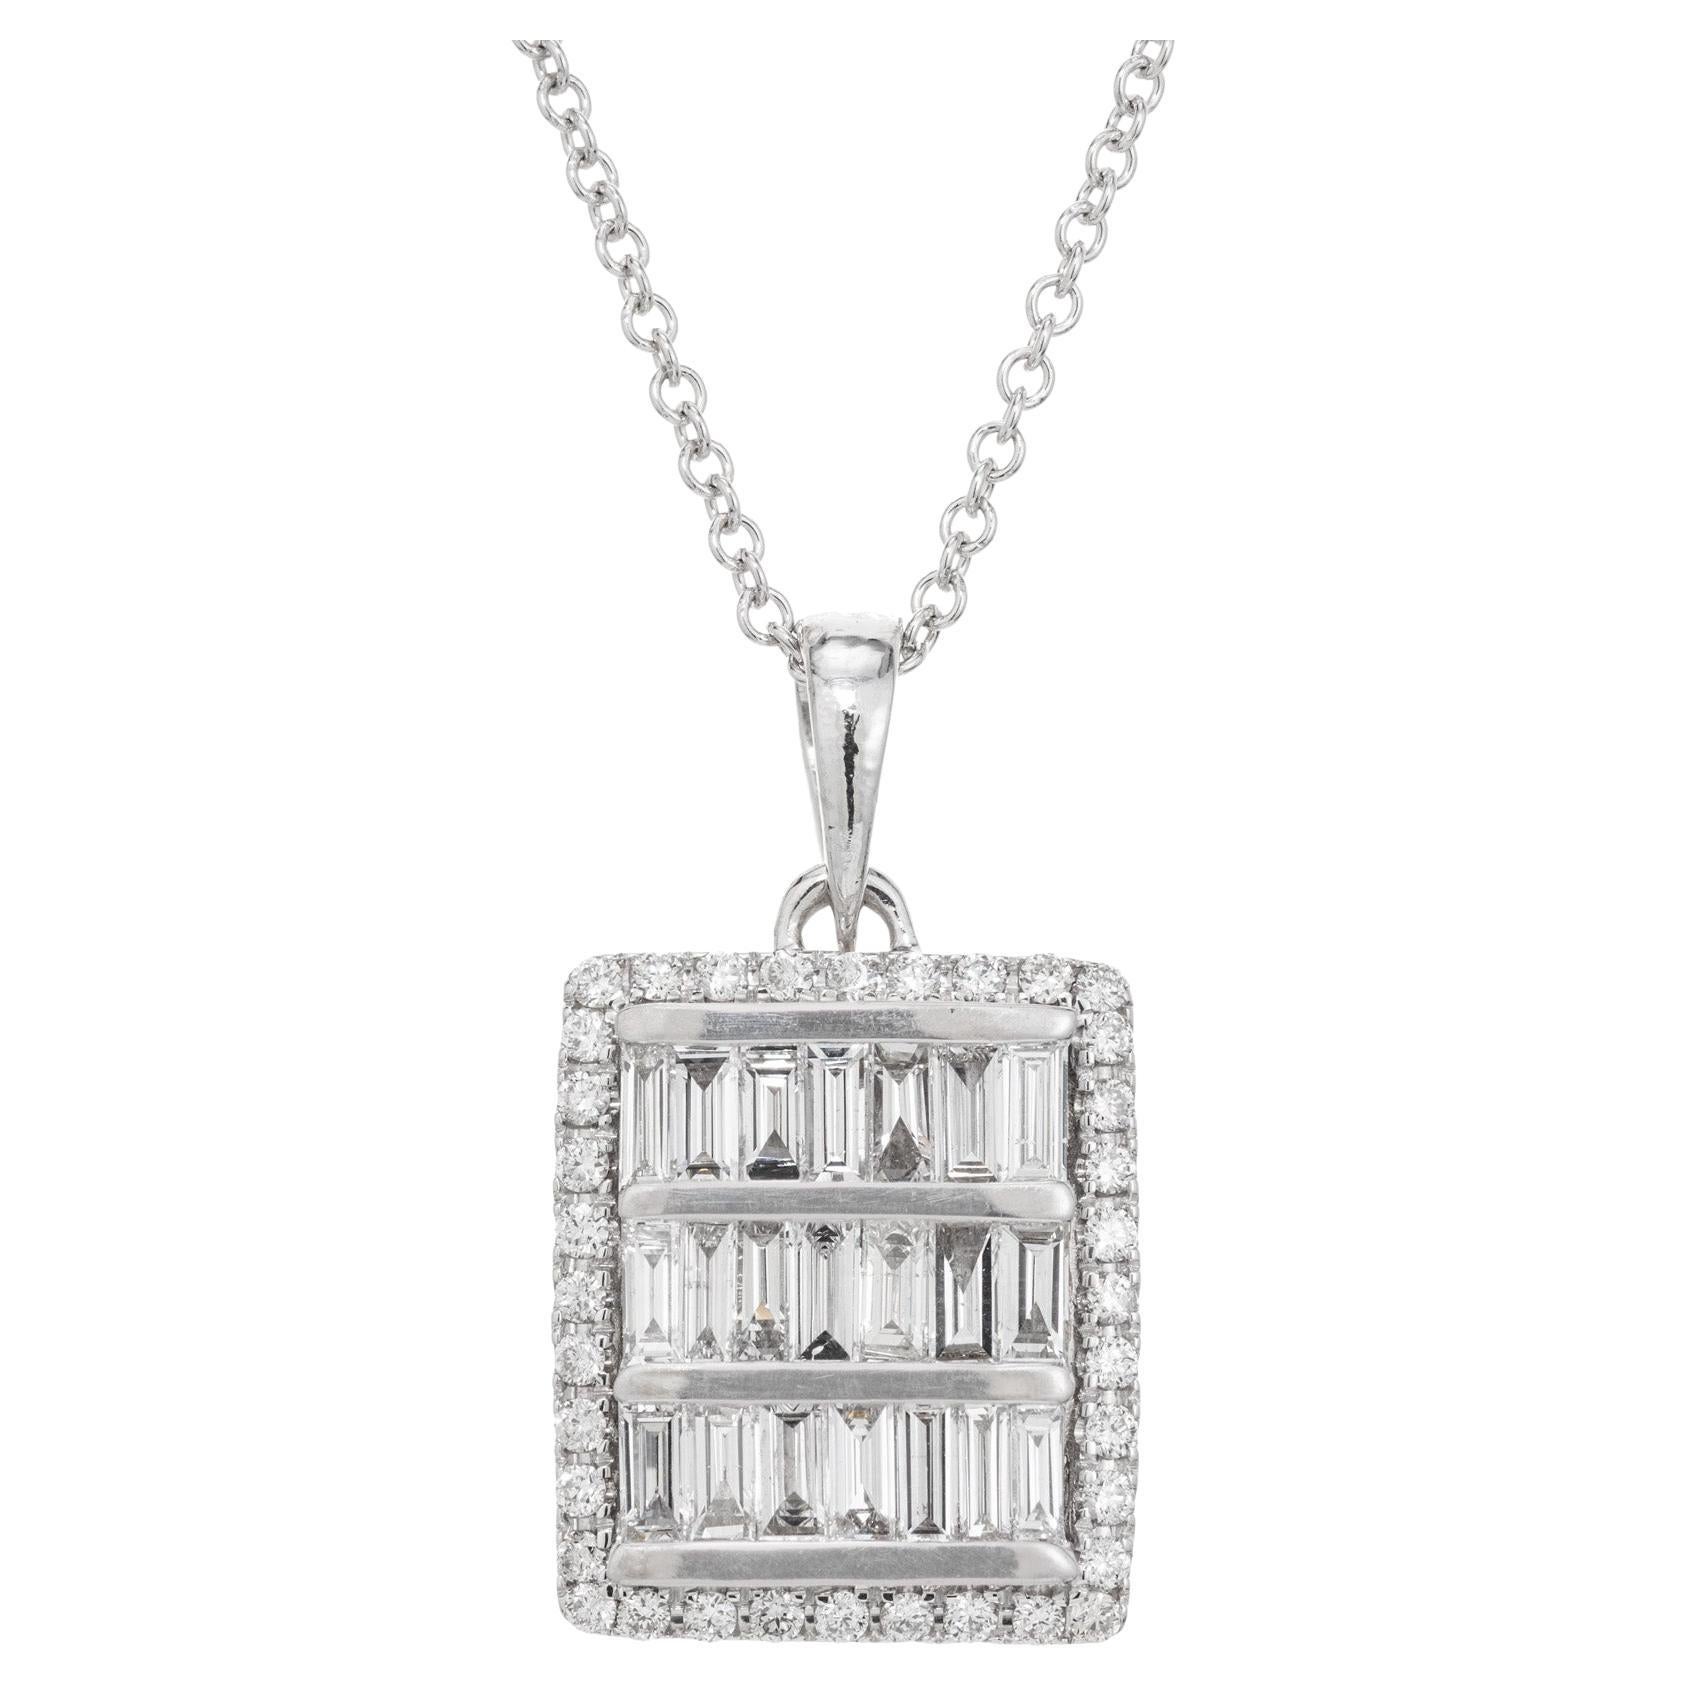 1.36 Carat Diamond White Gold Rectangular Modern Pendant Necklace